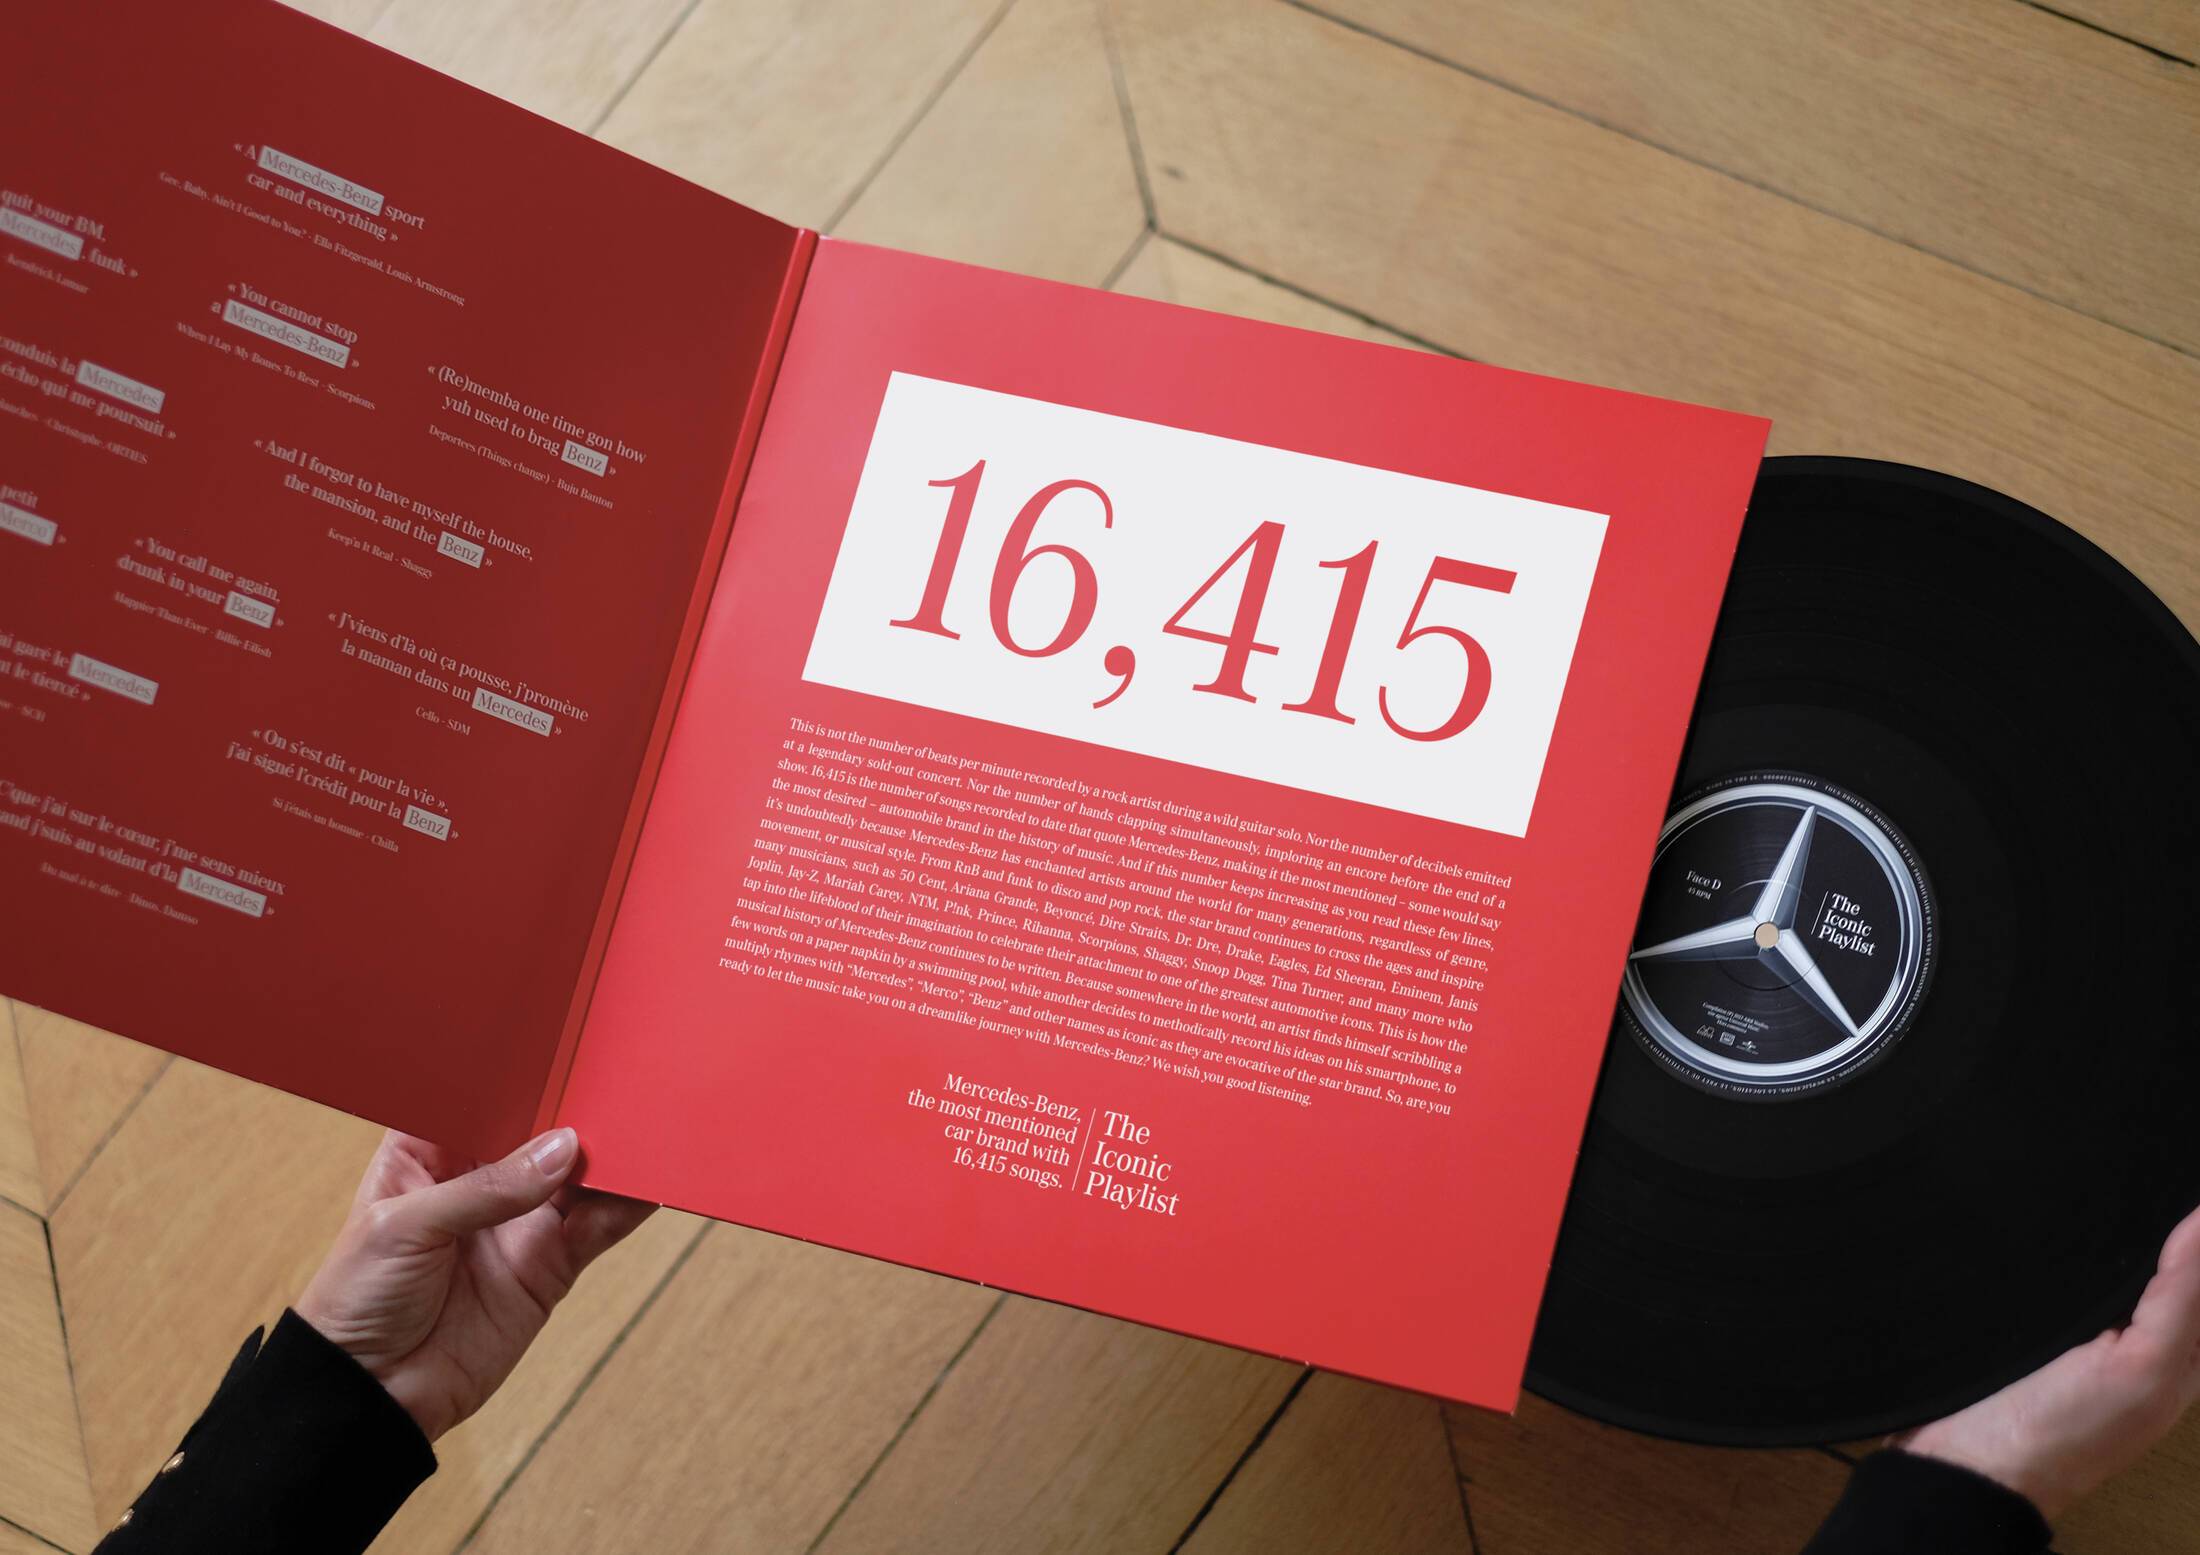 Mercedes-Benz Iconic Playlist vinyl cover art inside